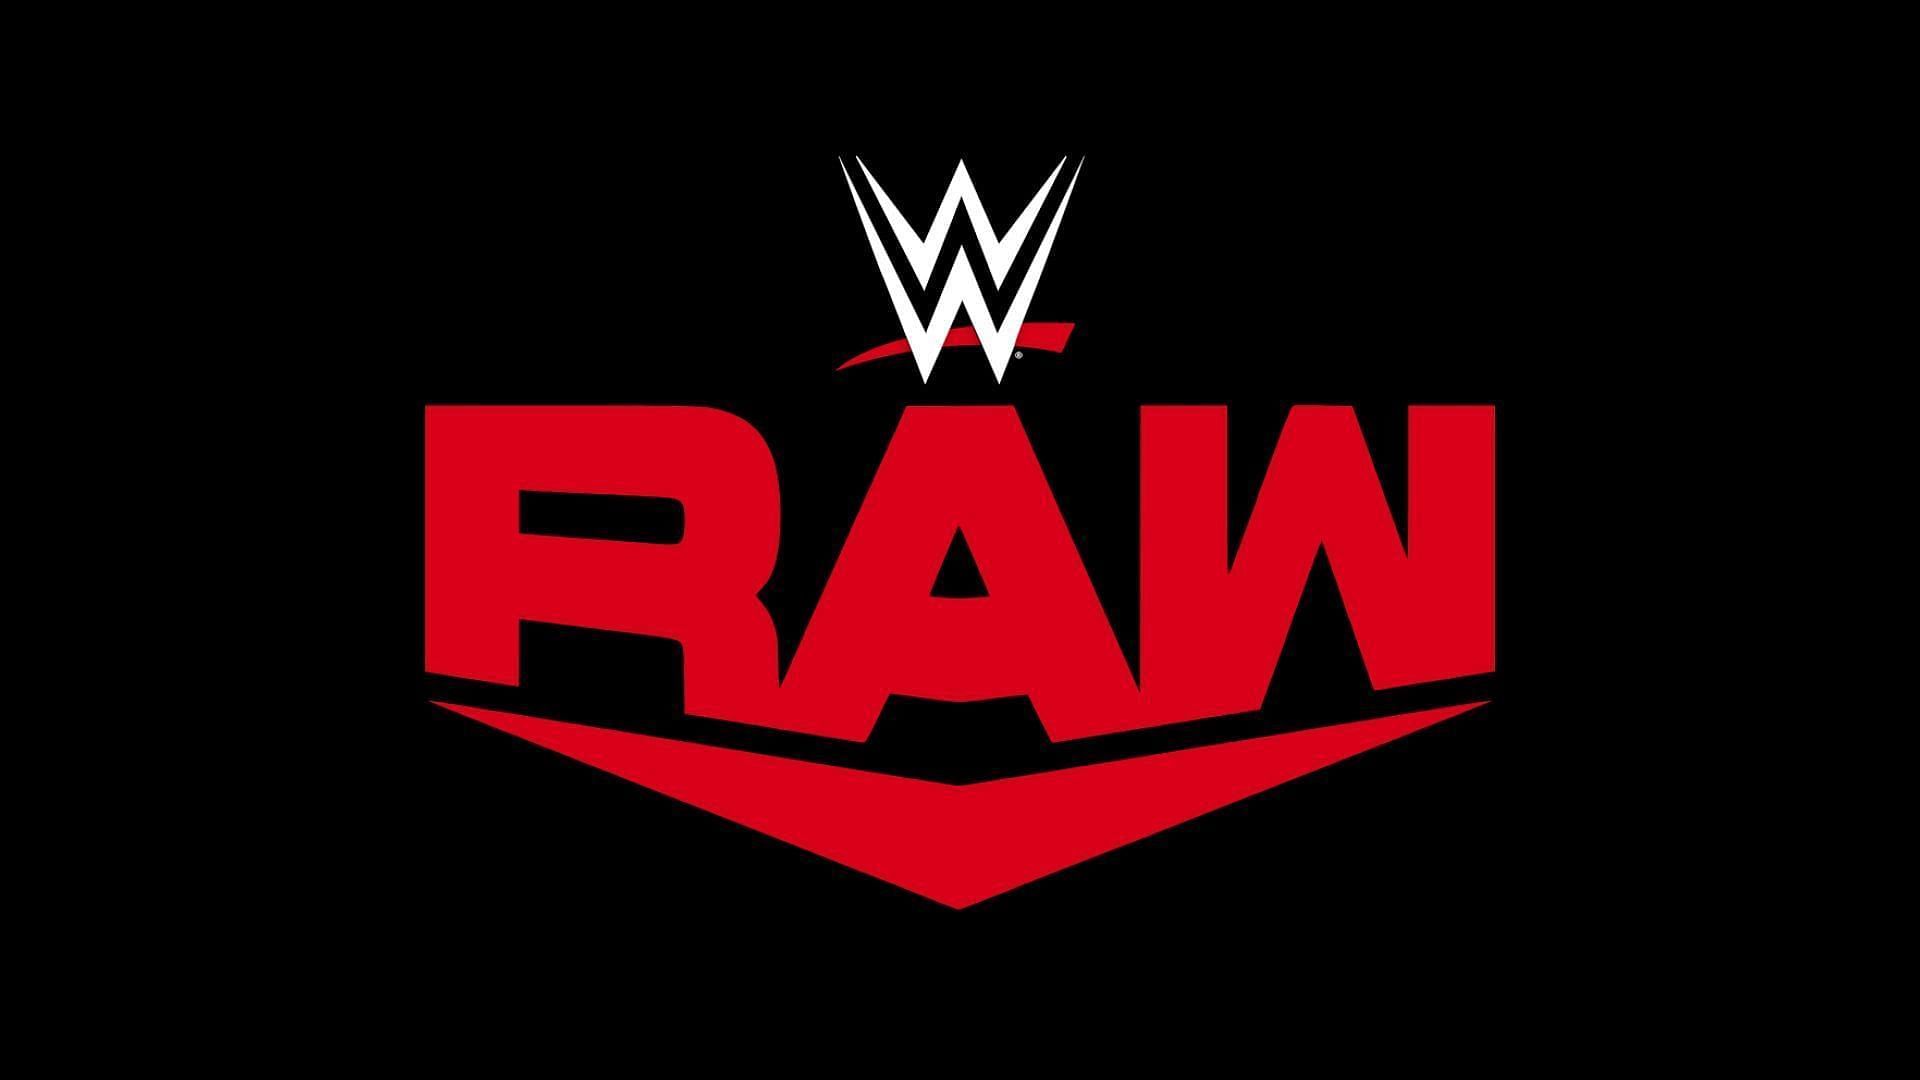 WWE RAW airs every Monday night